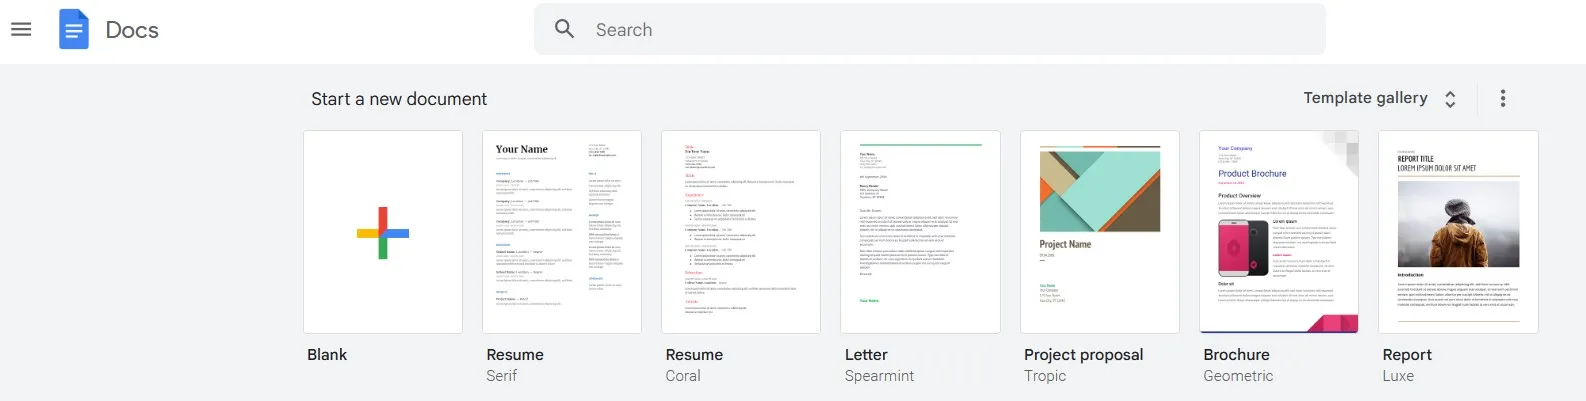 open blank document in google docs